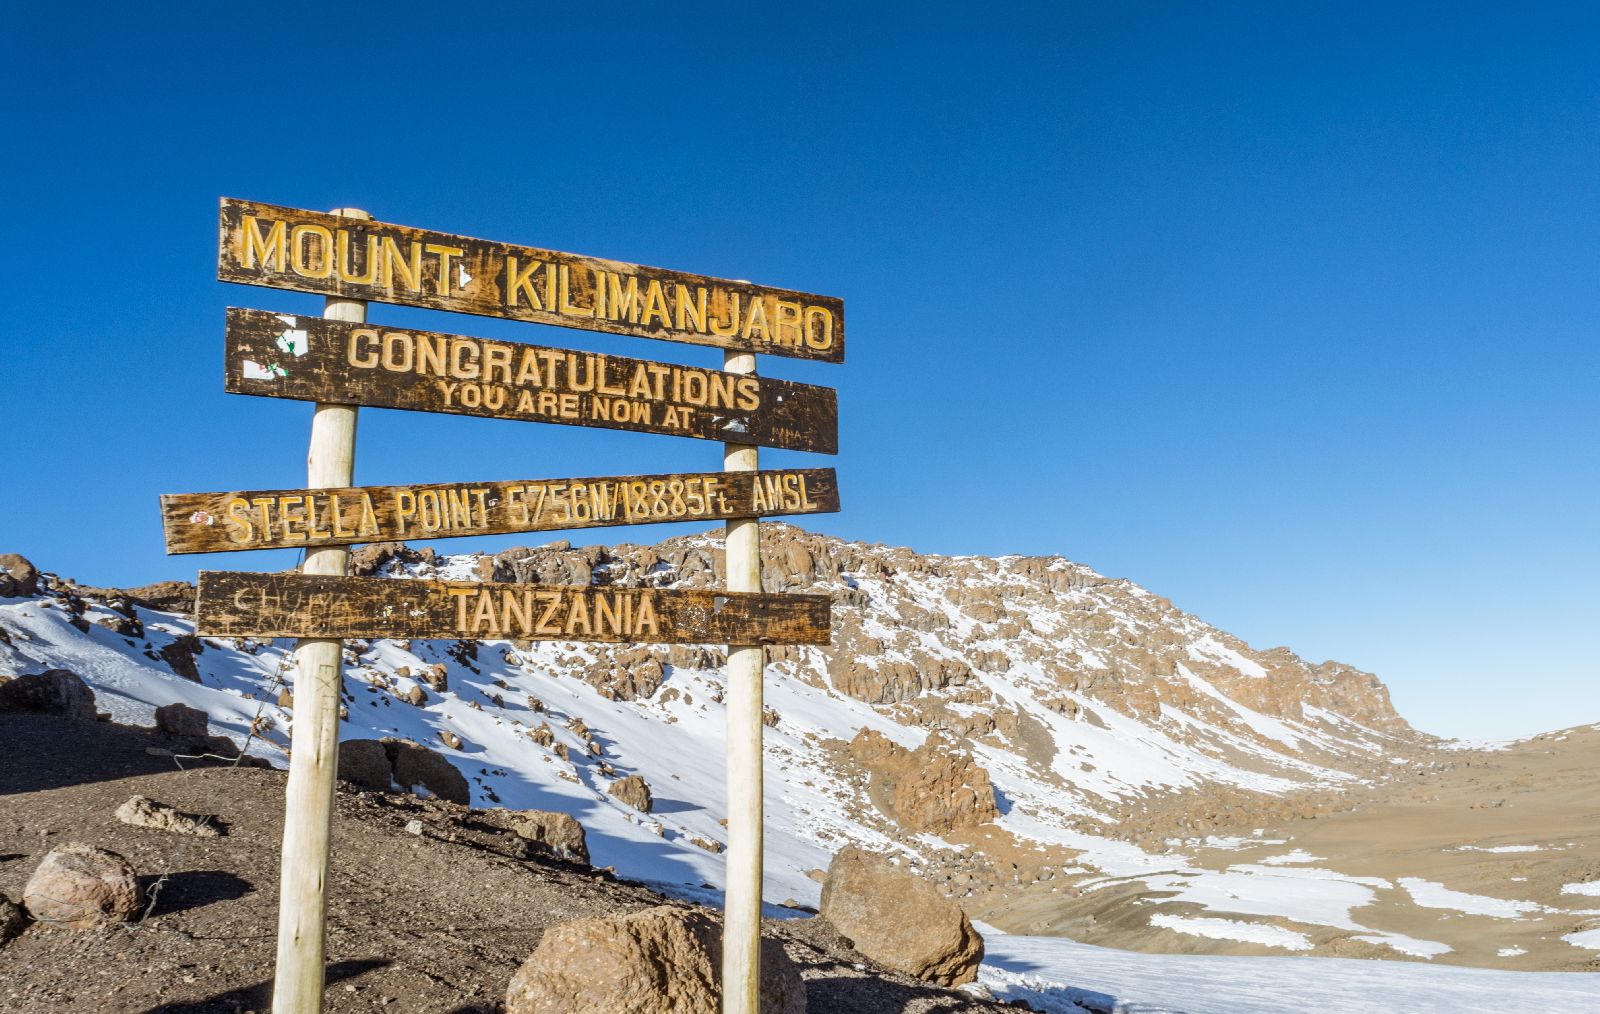 Signs at the Stella Point summit of Mount Kilimanjaro in Tanzania